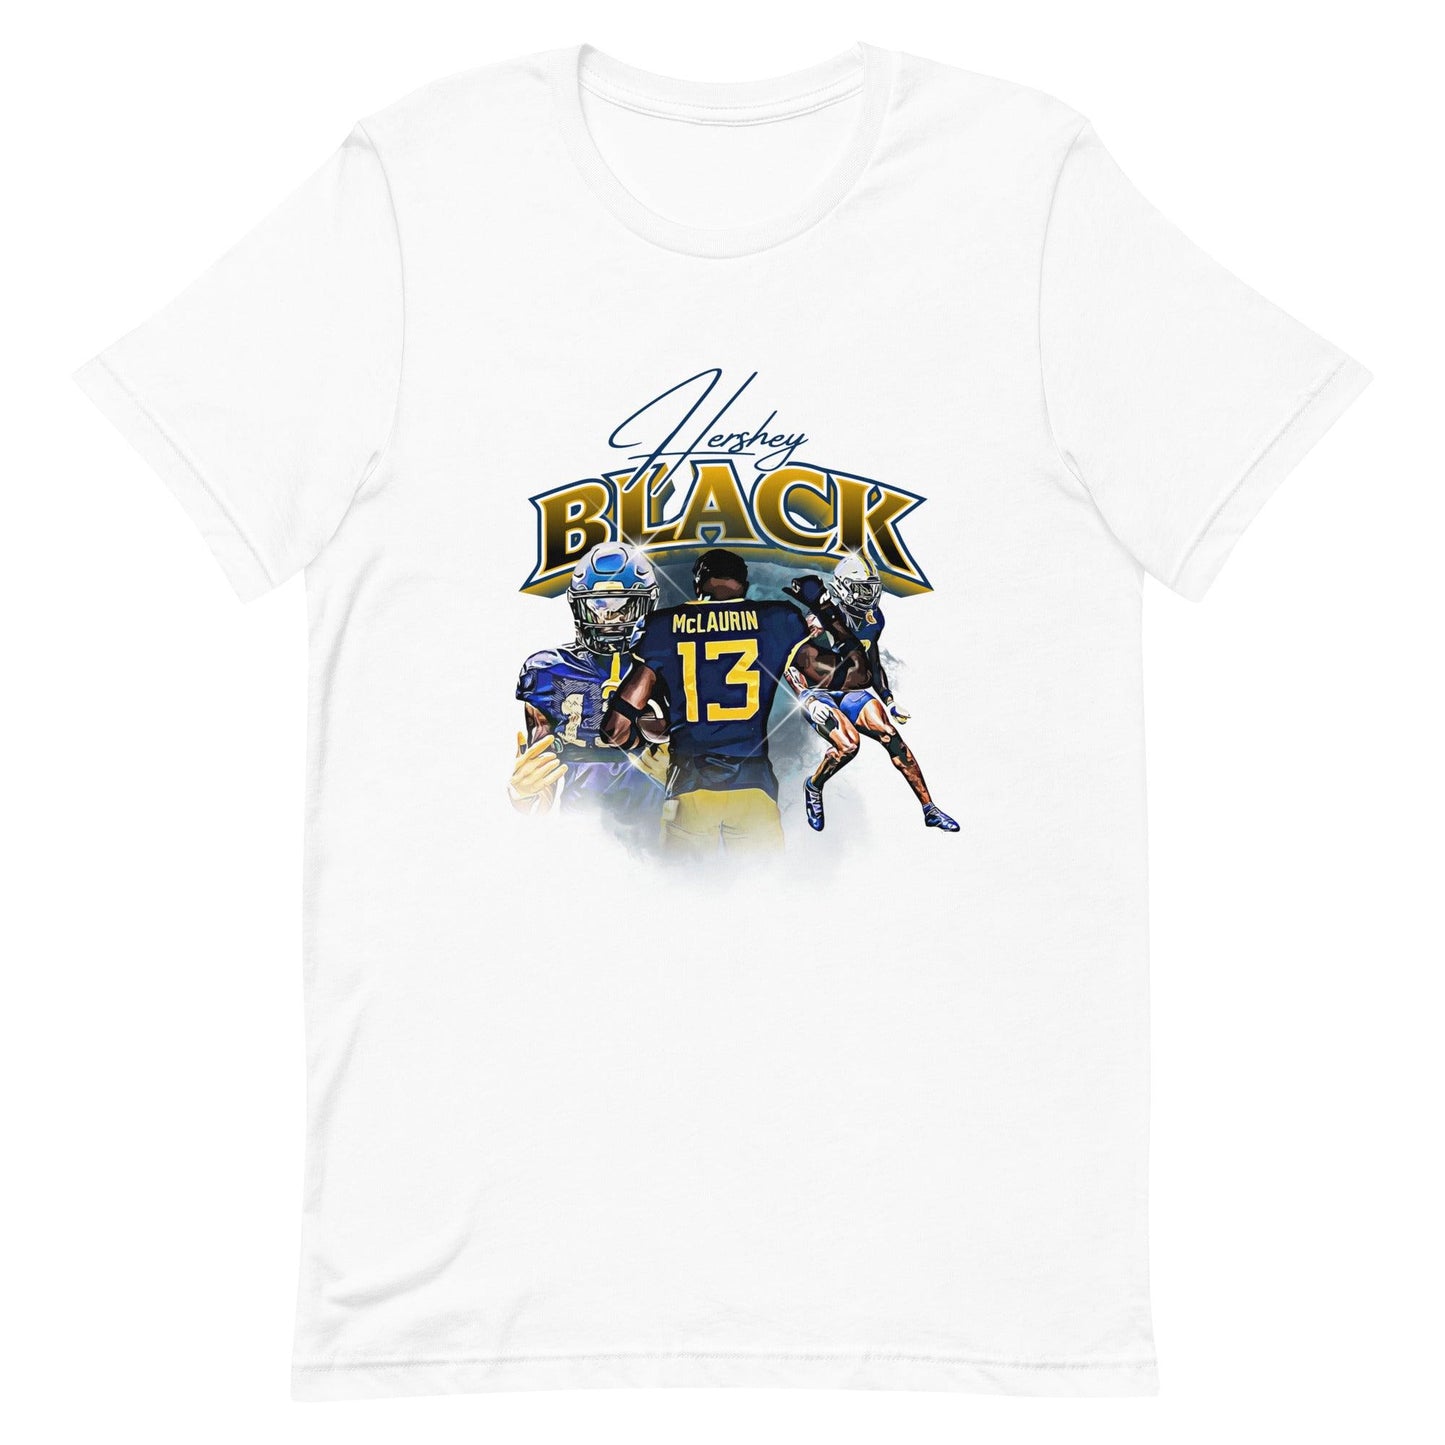 Hershey Black “Heritage” t-shirt - Fan Arch